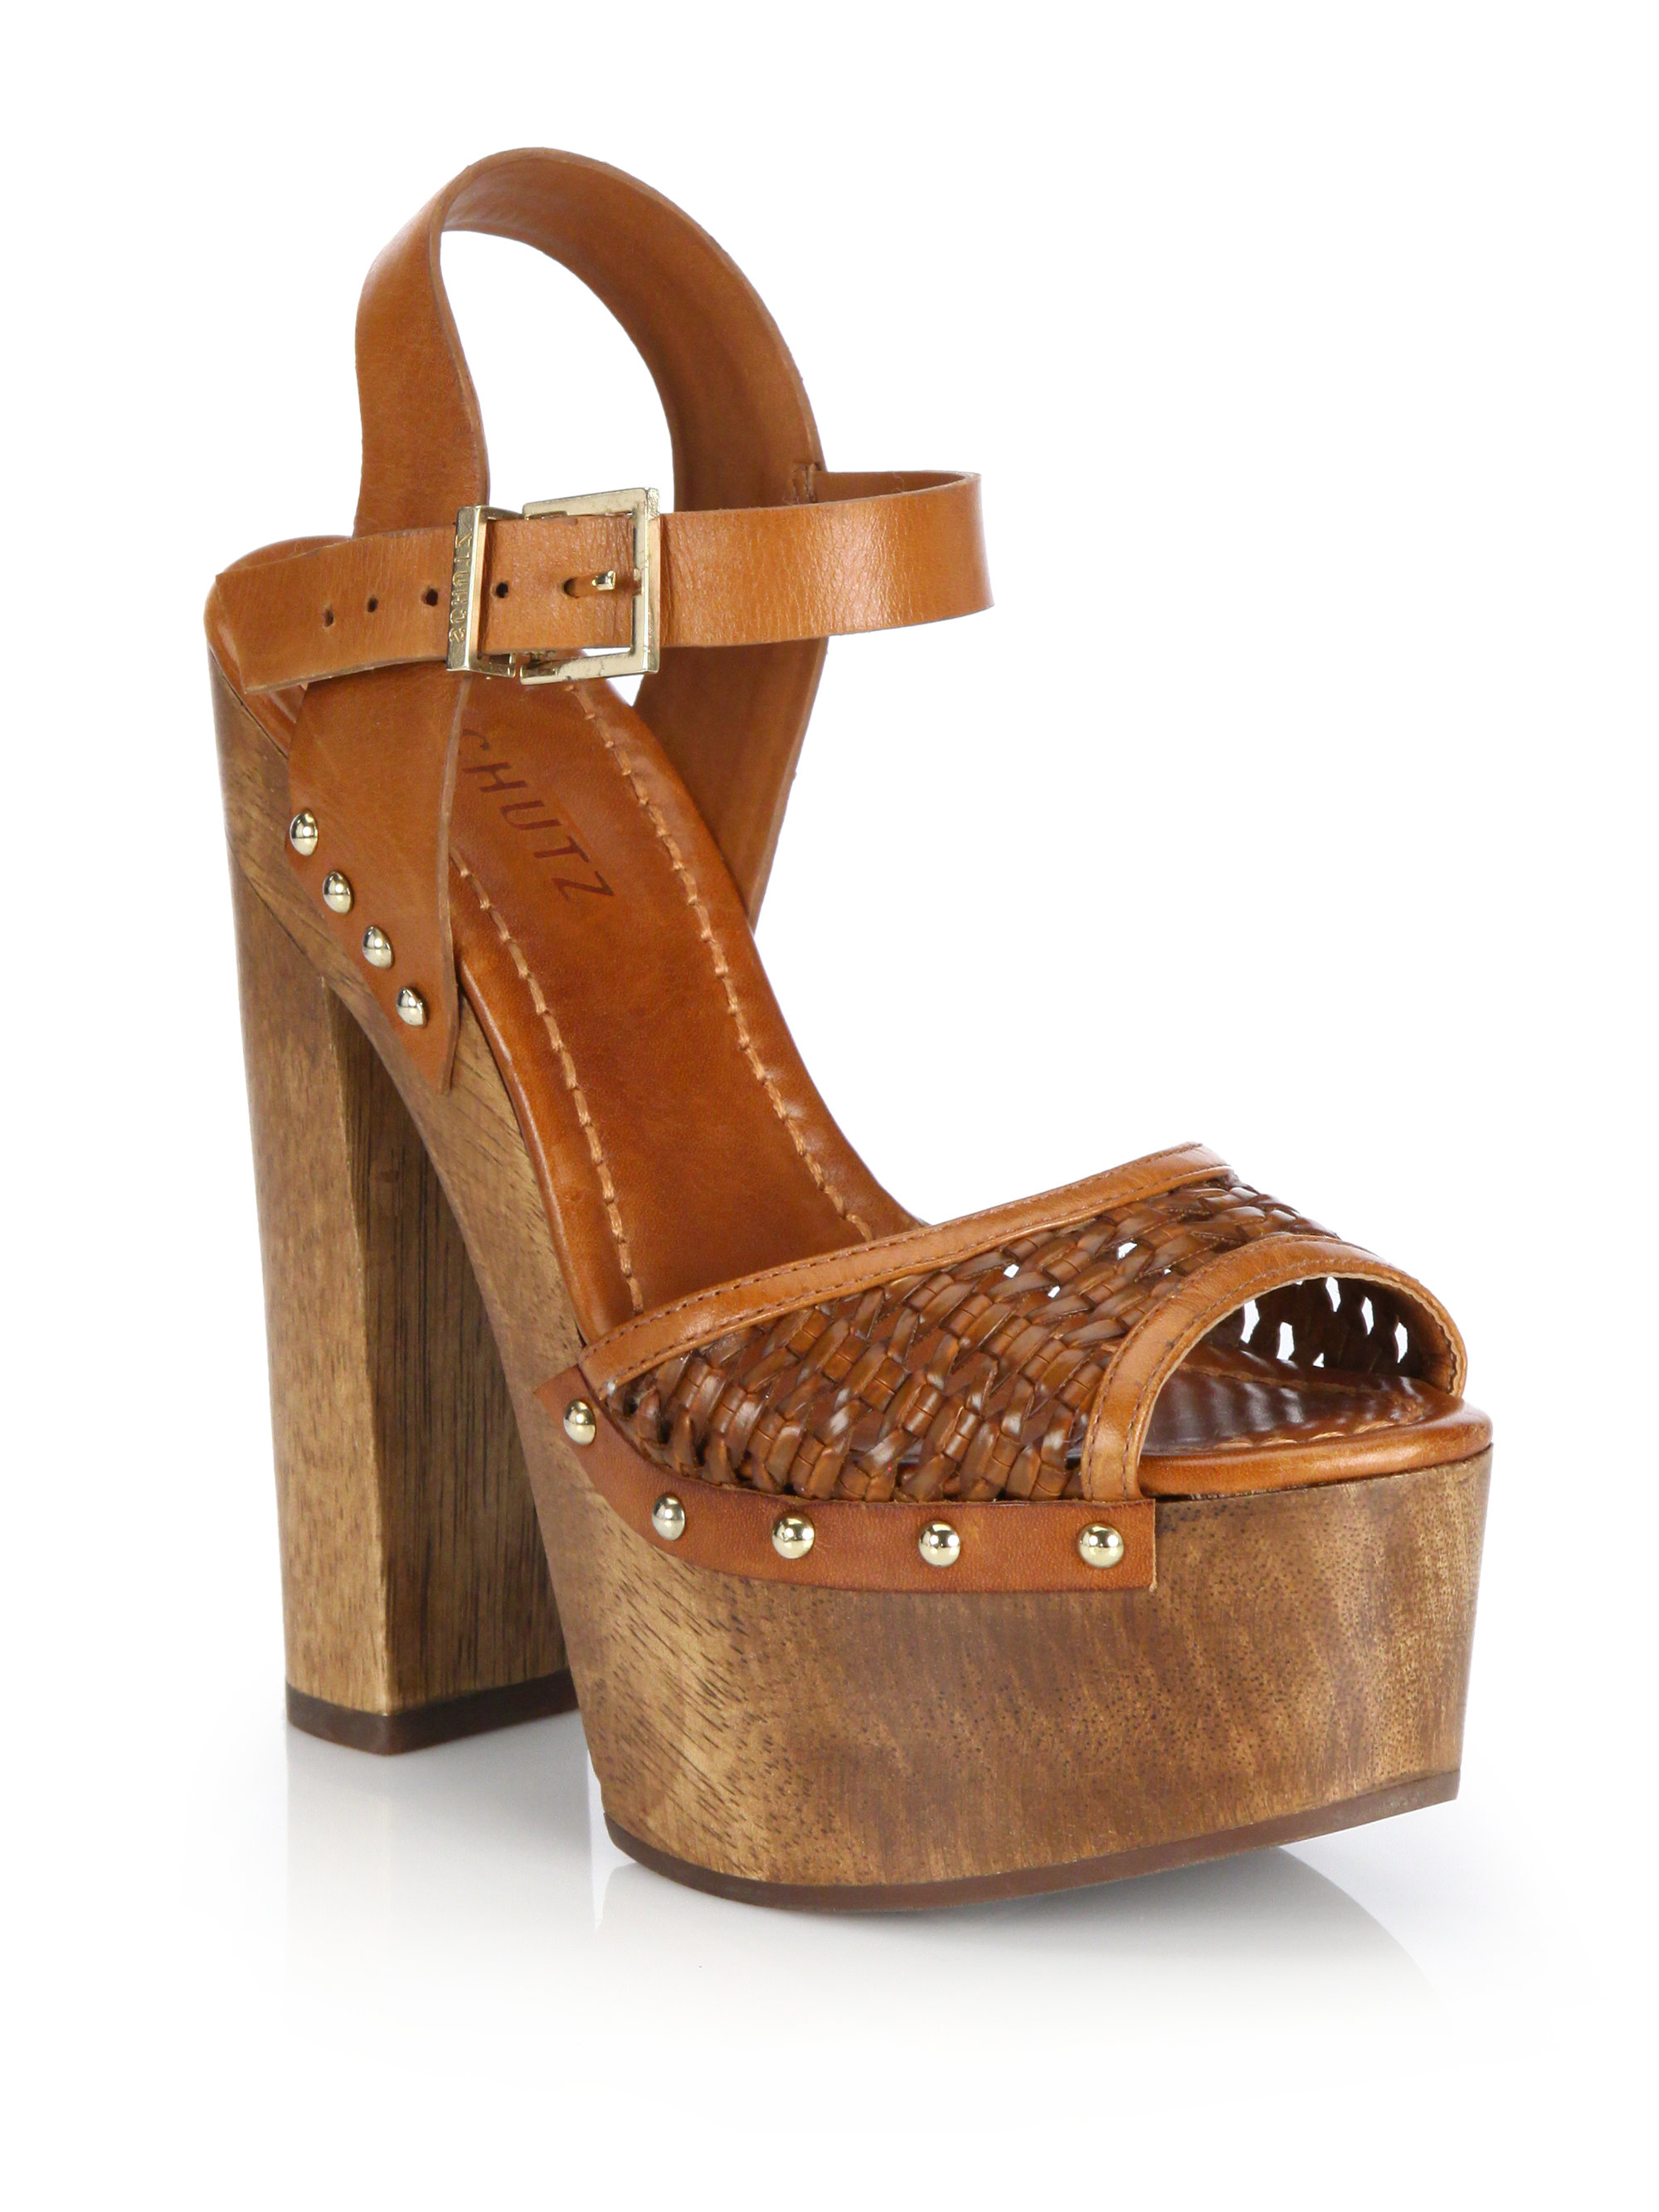 Lyst Schutz Janice Woven Leather Platform Sandals in Brown